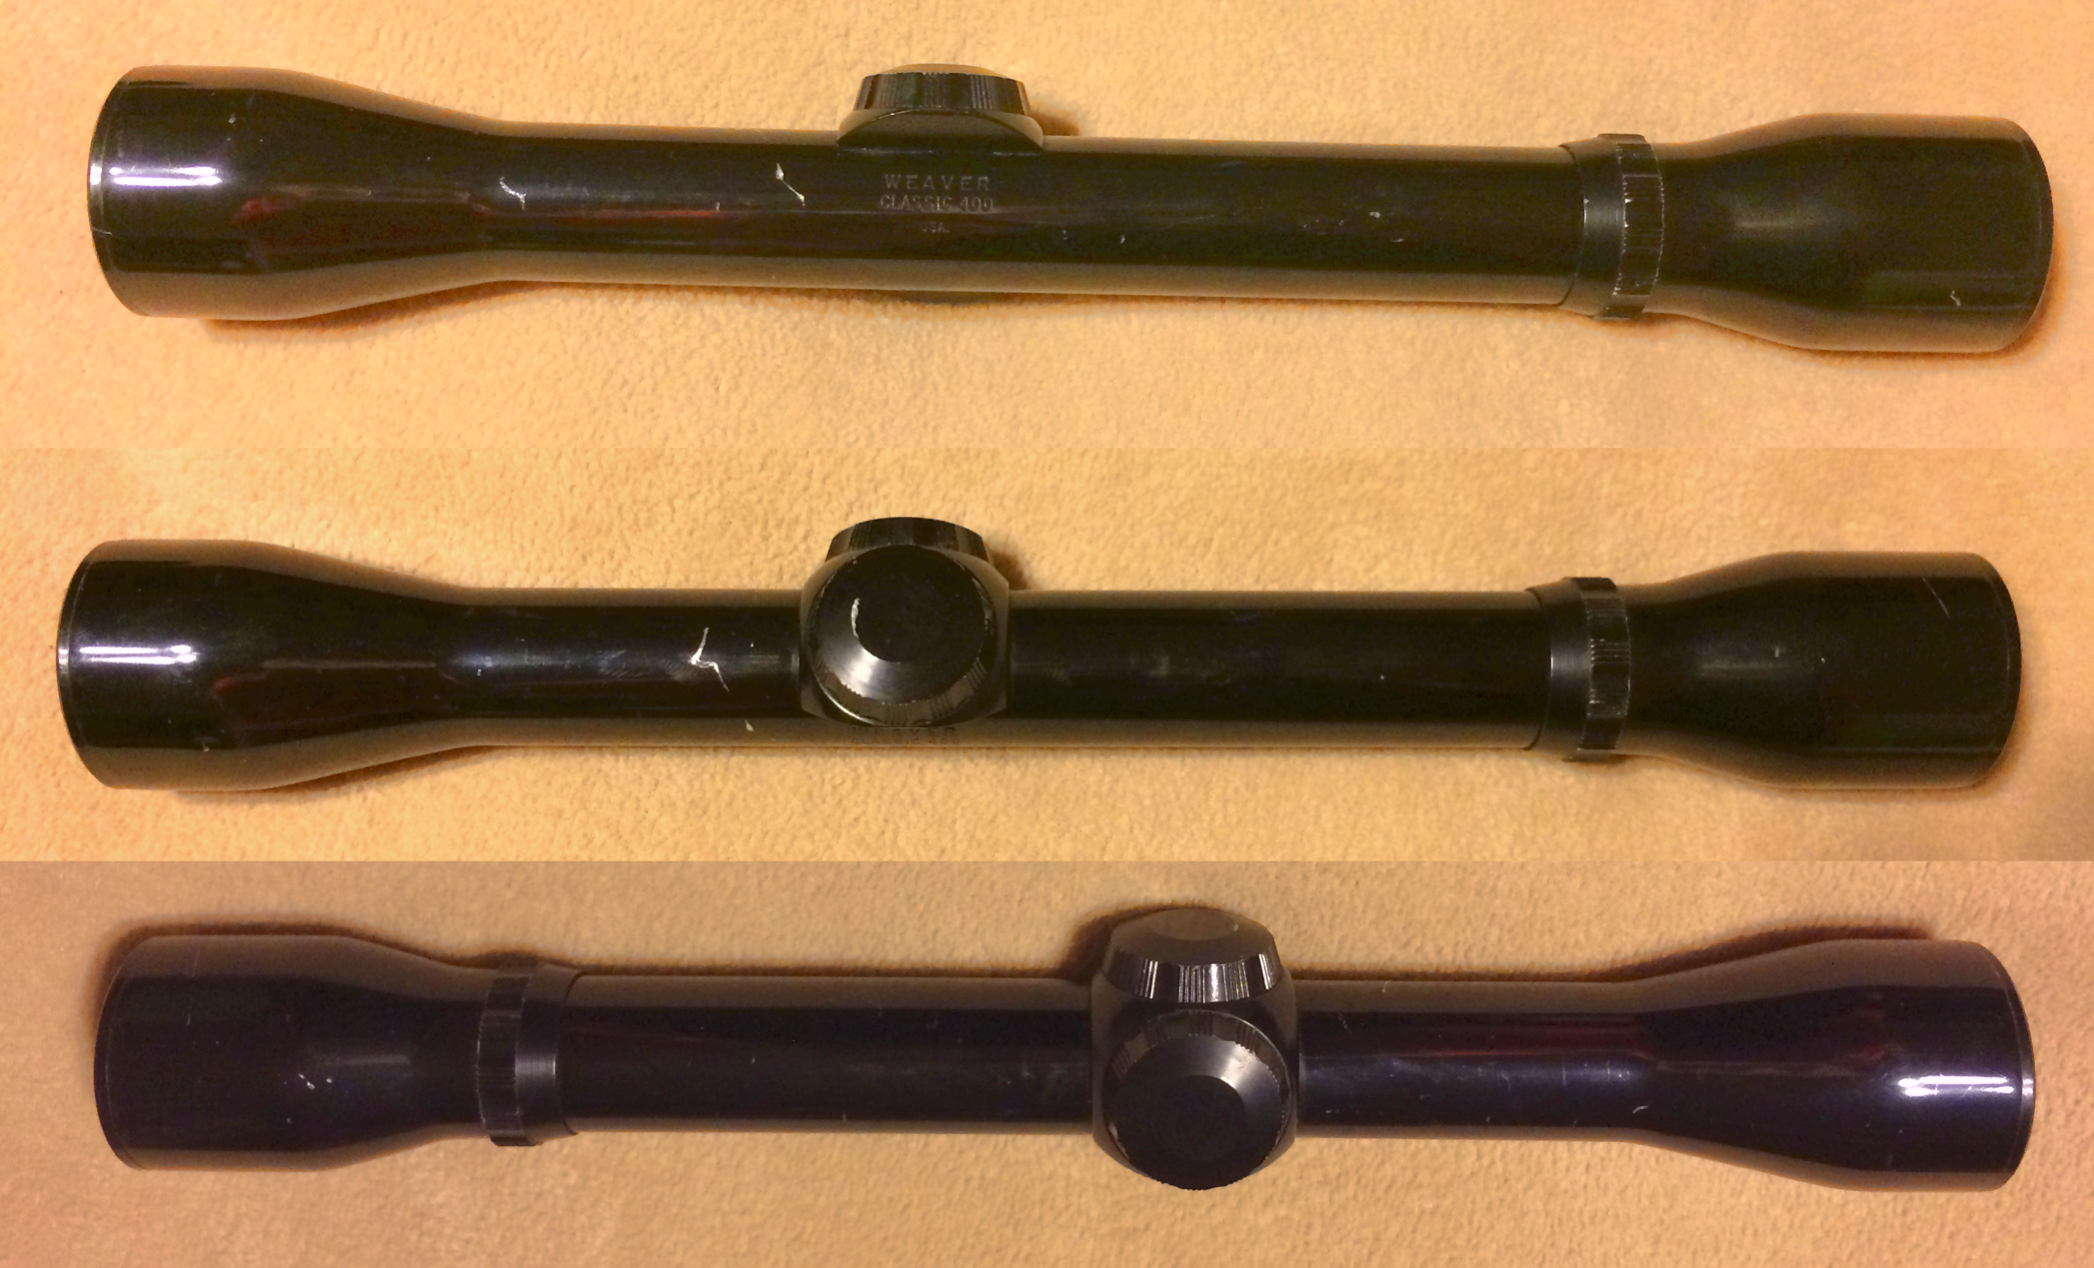 Weaver scopes made in japan